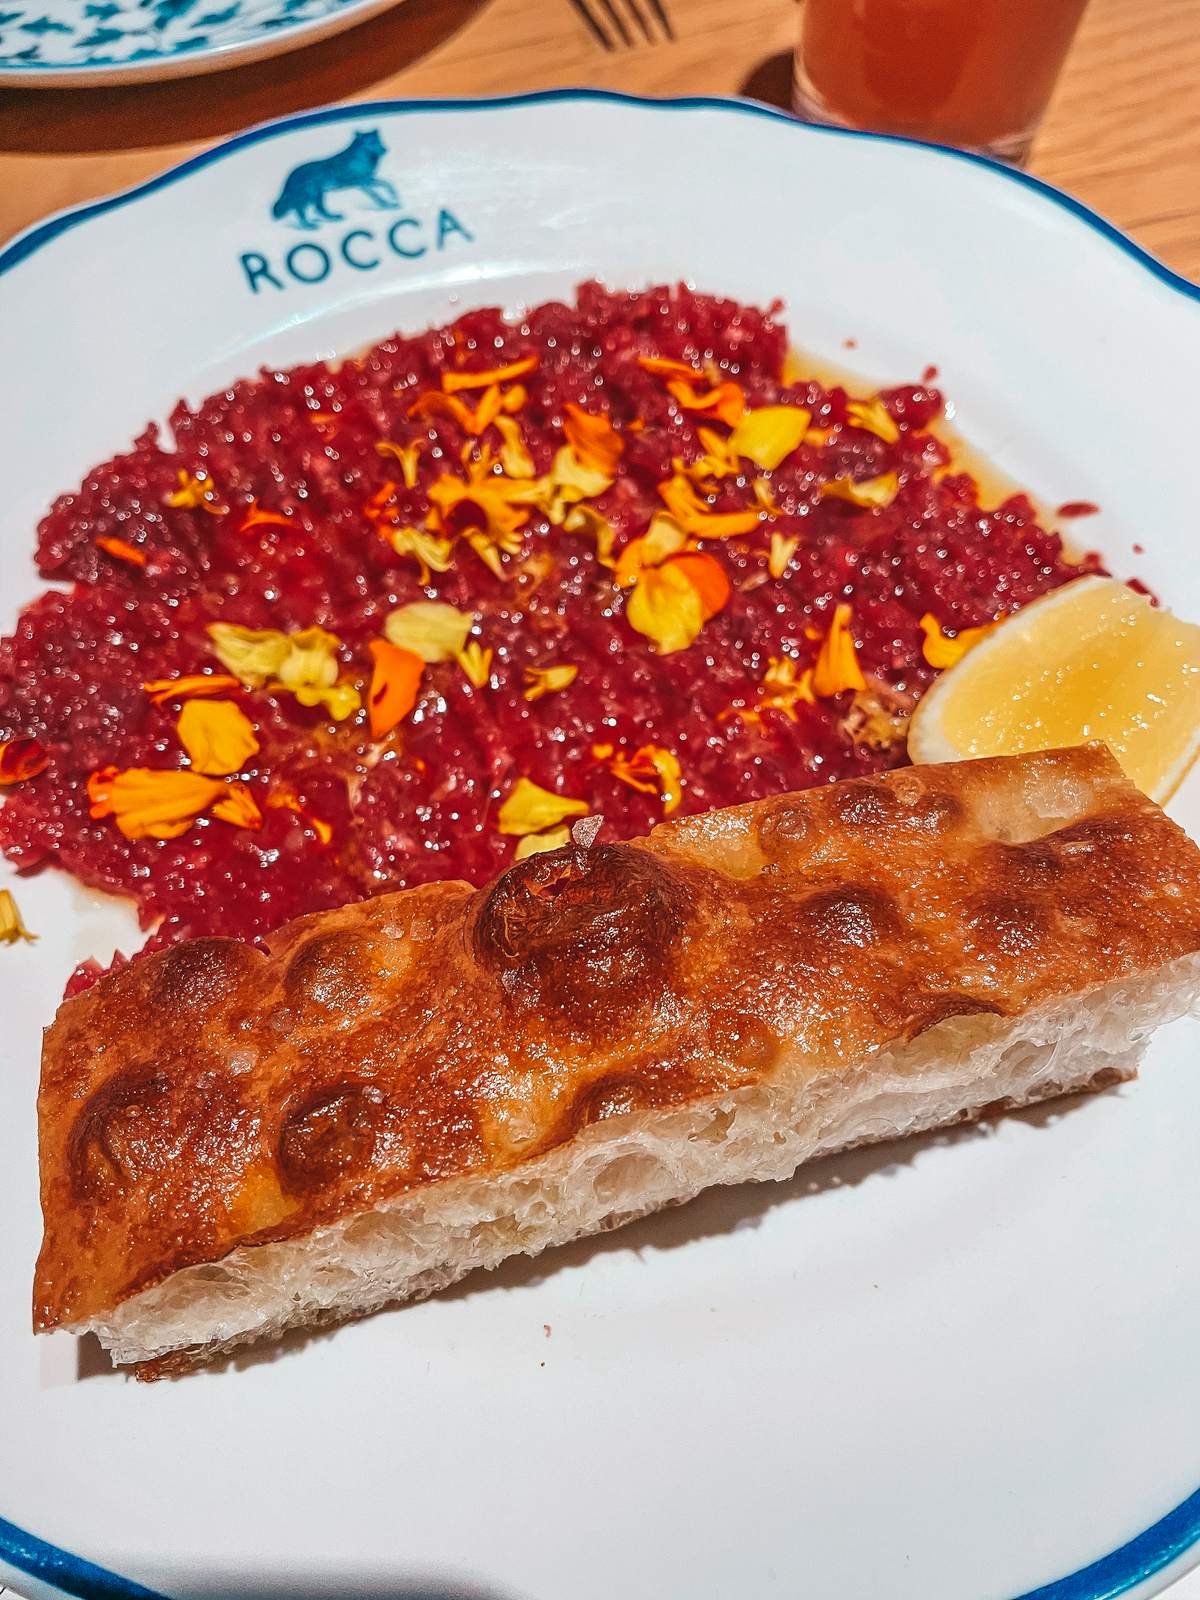 Carne cruda from Rocca